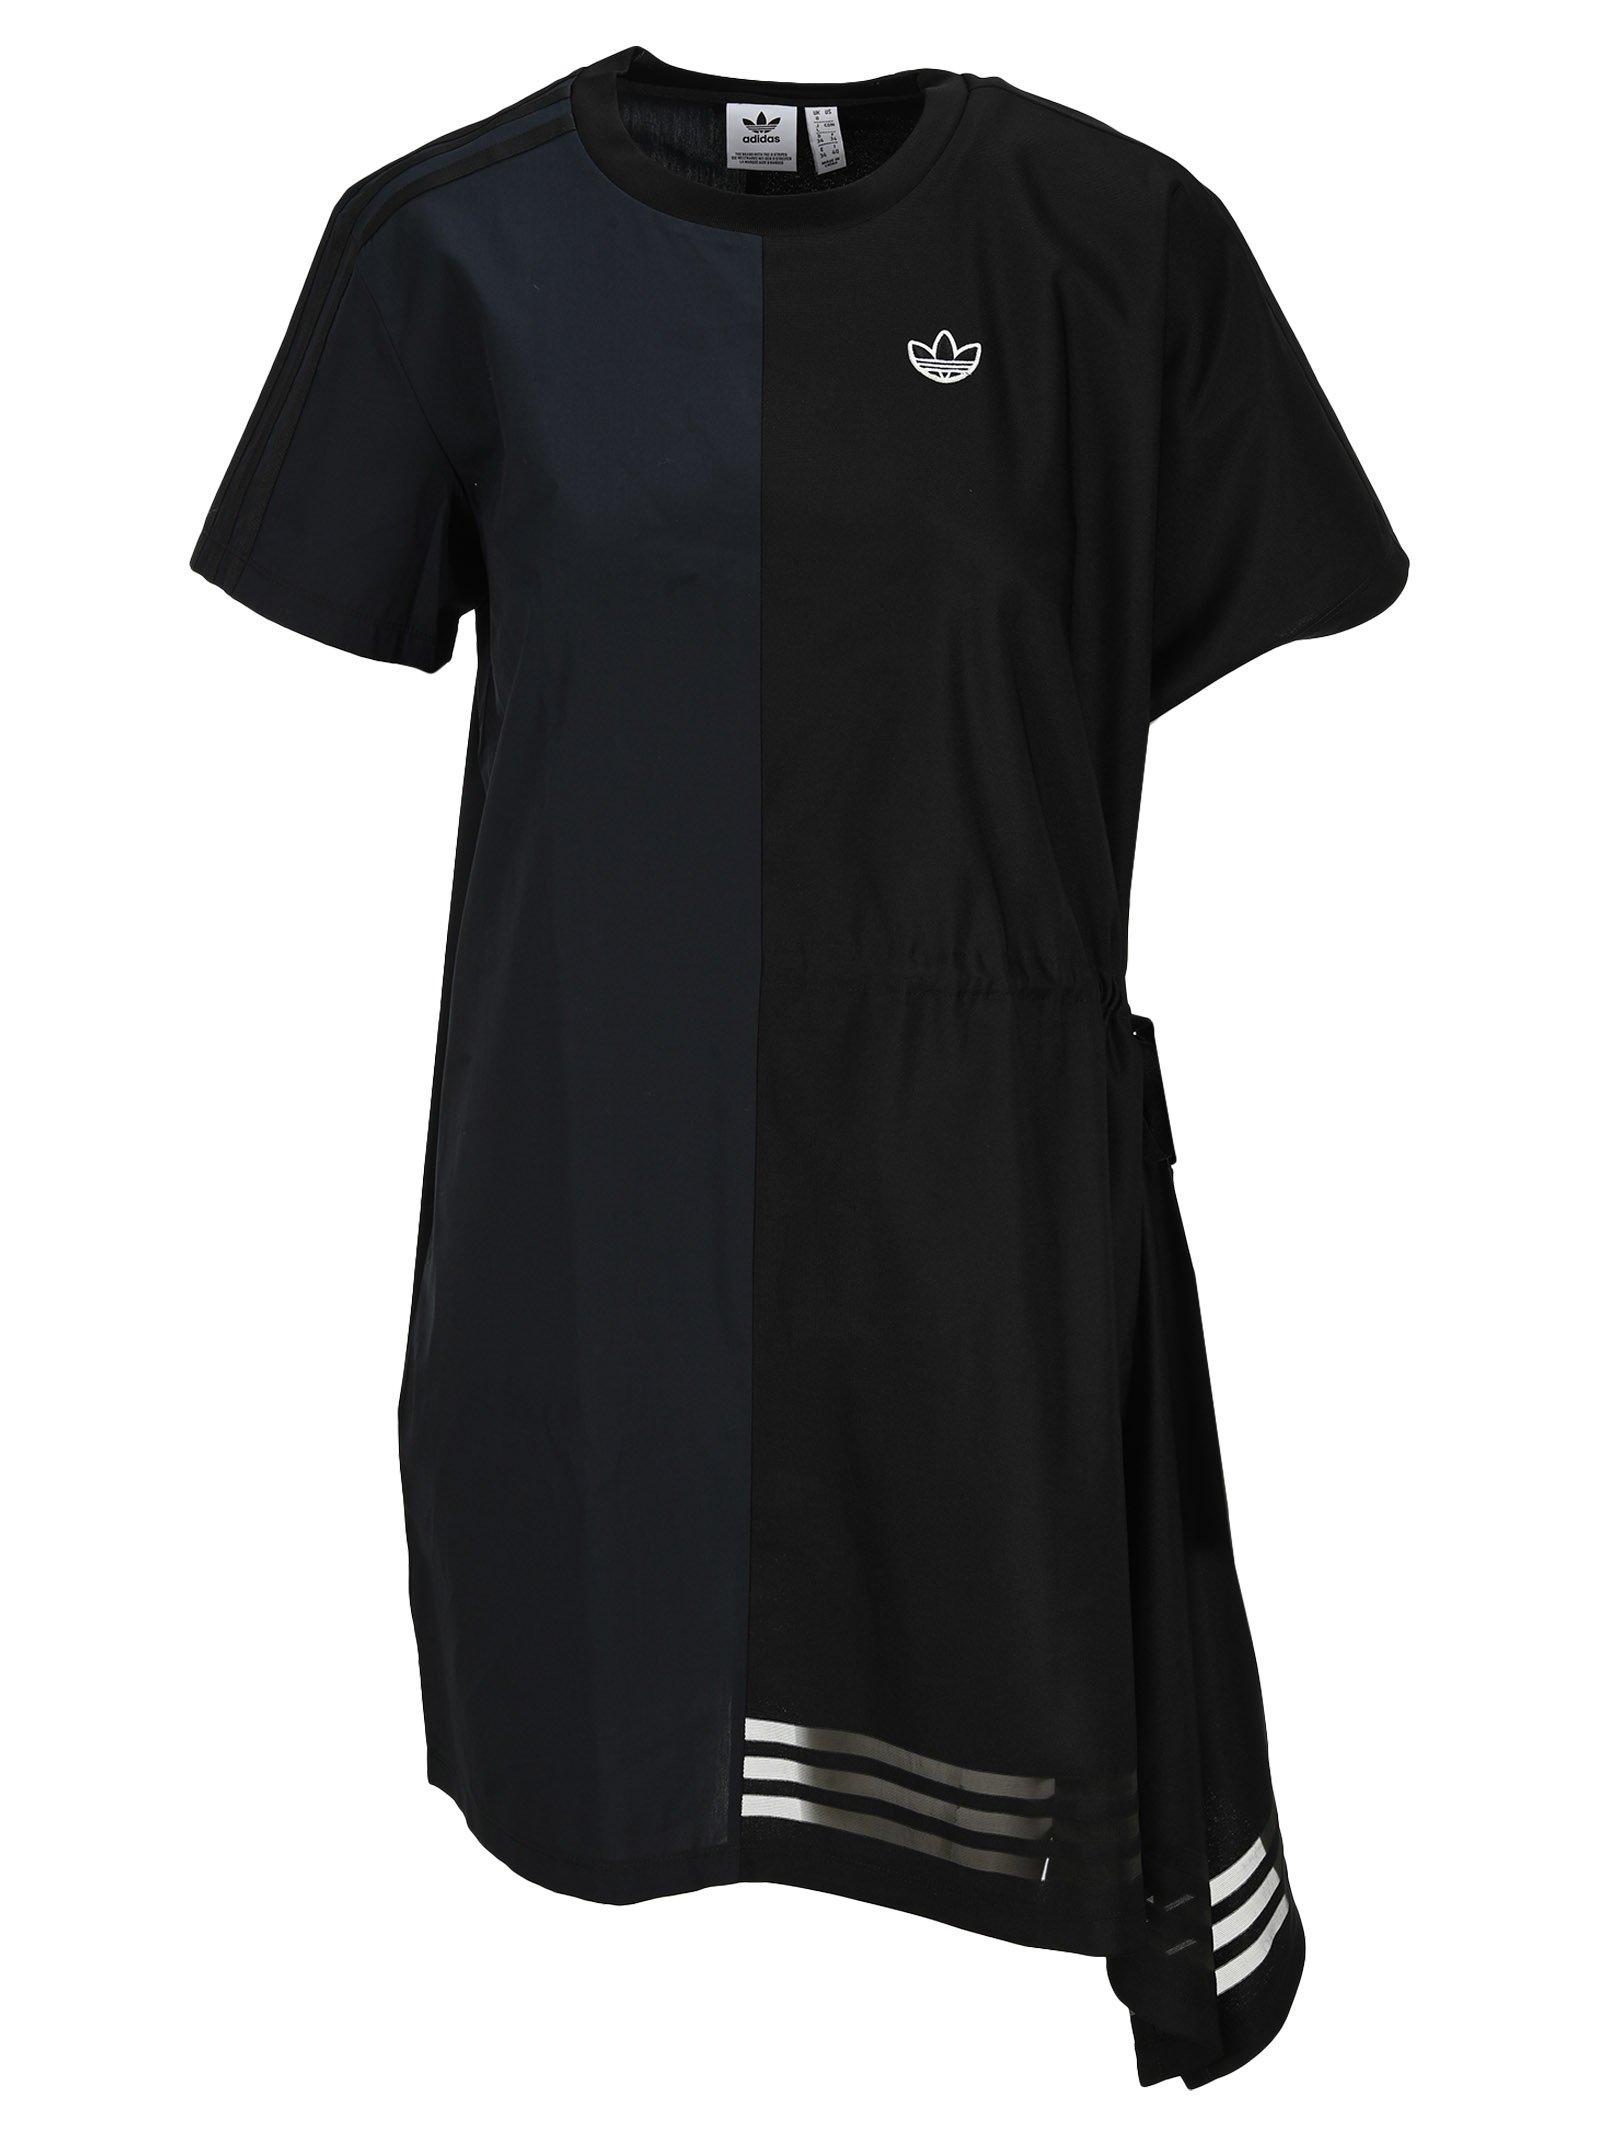 adidas Originals Asymmetric T-shirt Dress in Black | Lyst